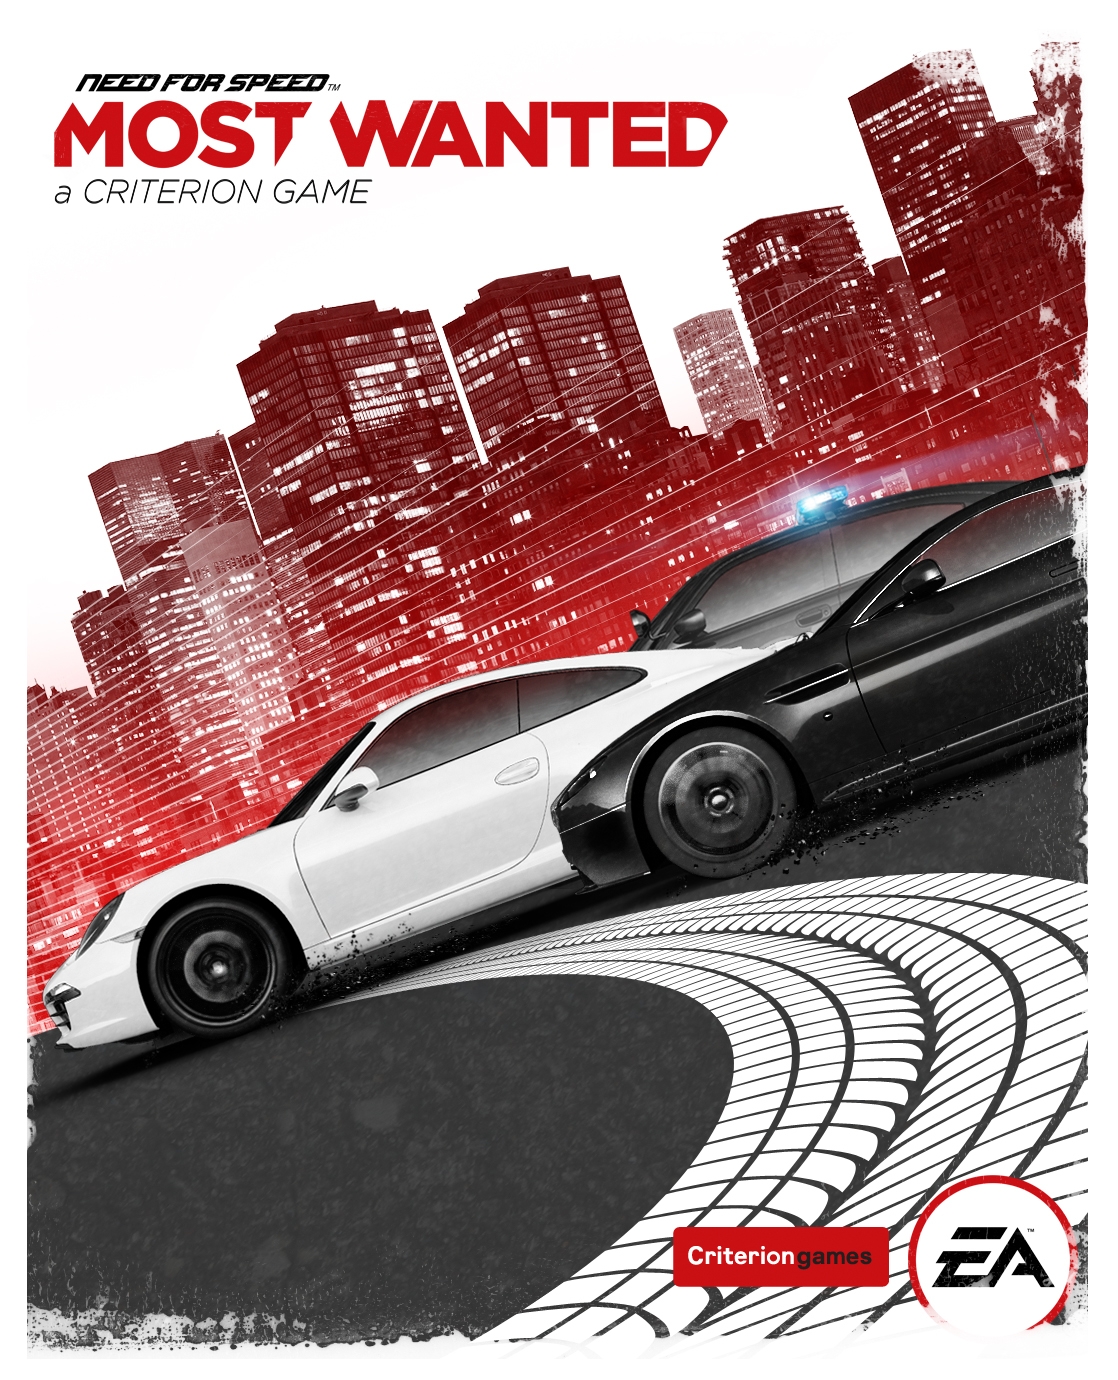 Спид мост вантед 2. NFS most wanted 2012 Постер. Коллекционное издание need for Speed most wanted. Нид фор СПИД мост вантед 2015. Need for Speed most wanted 2 2012.